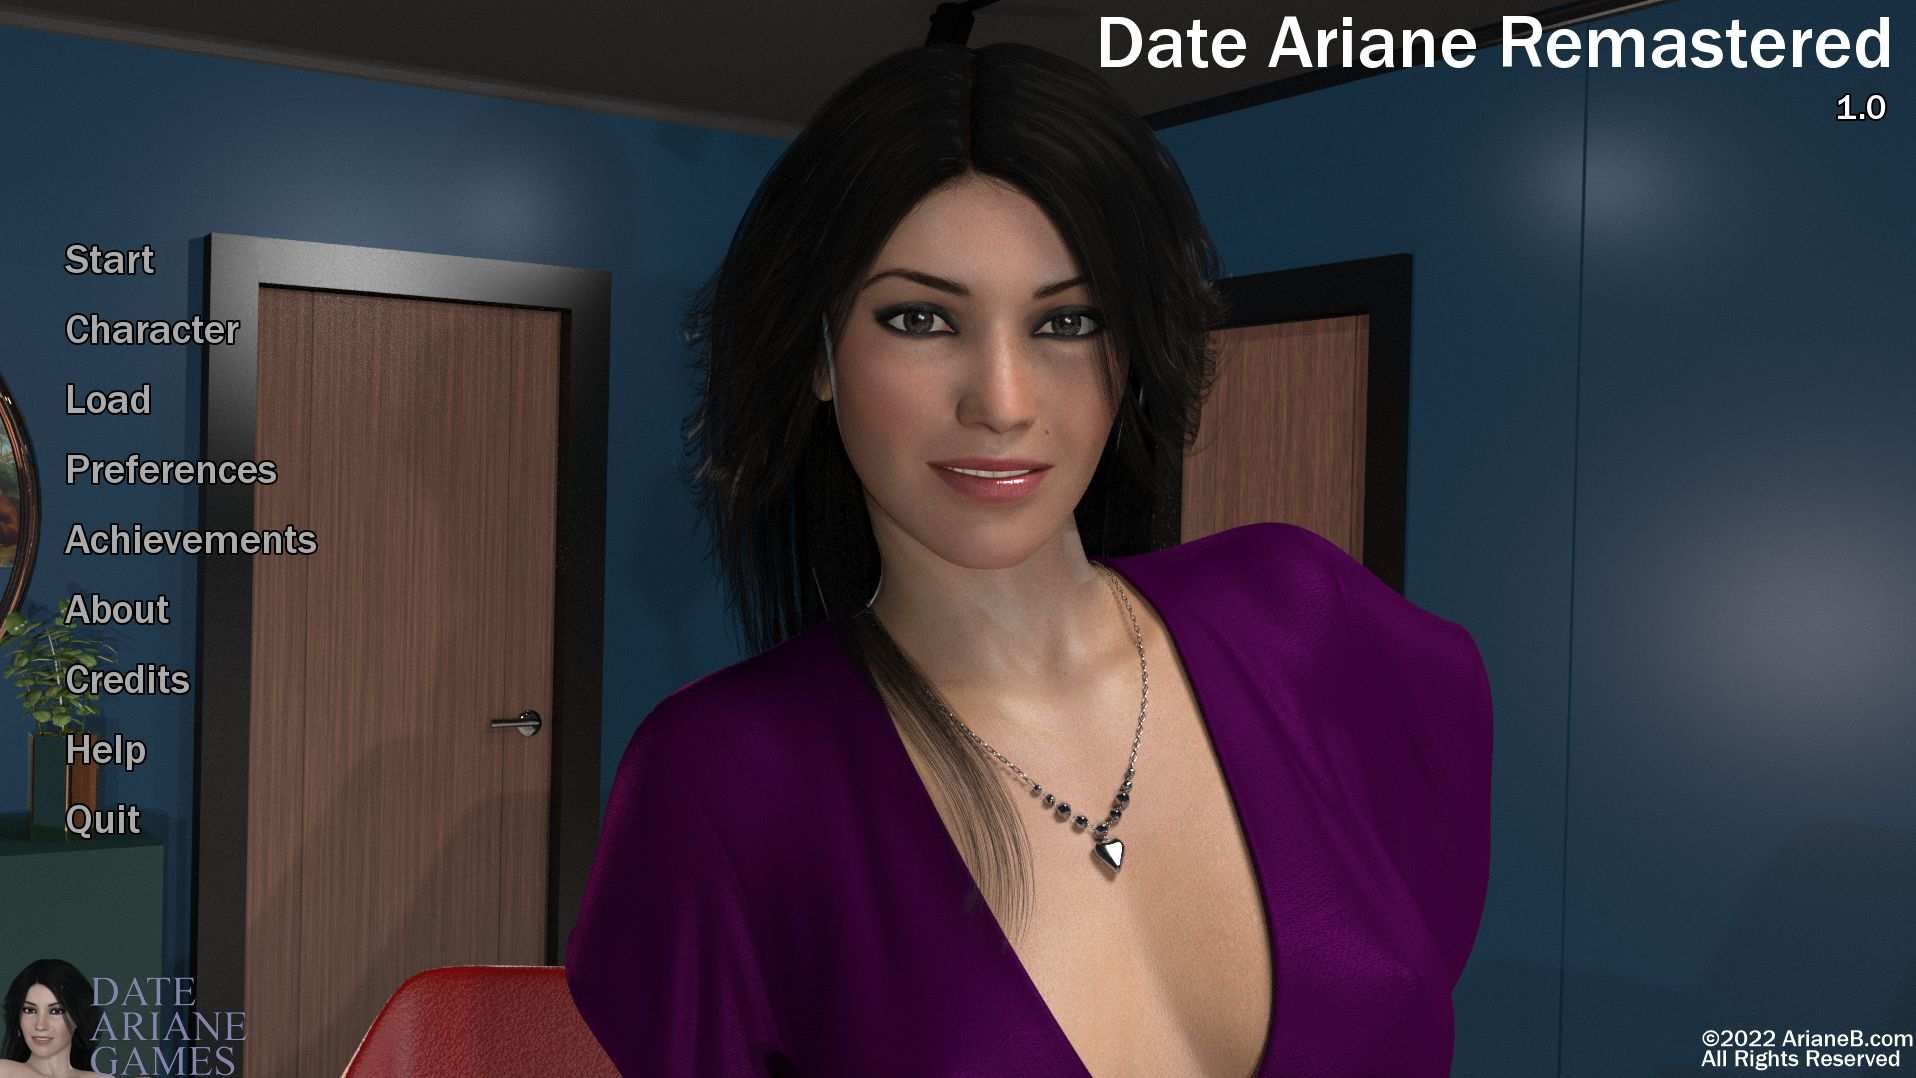 Date Ariane remasterisée